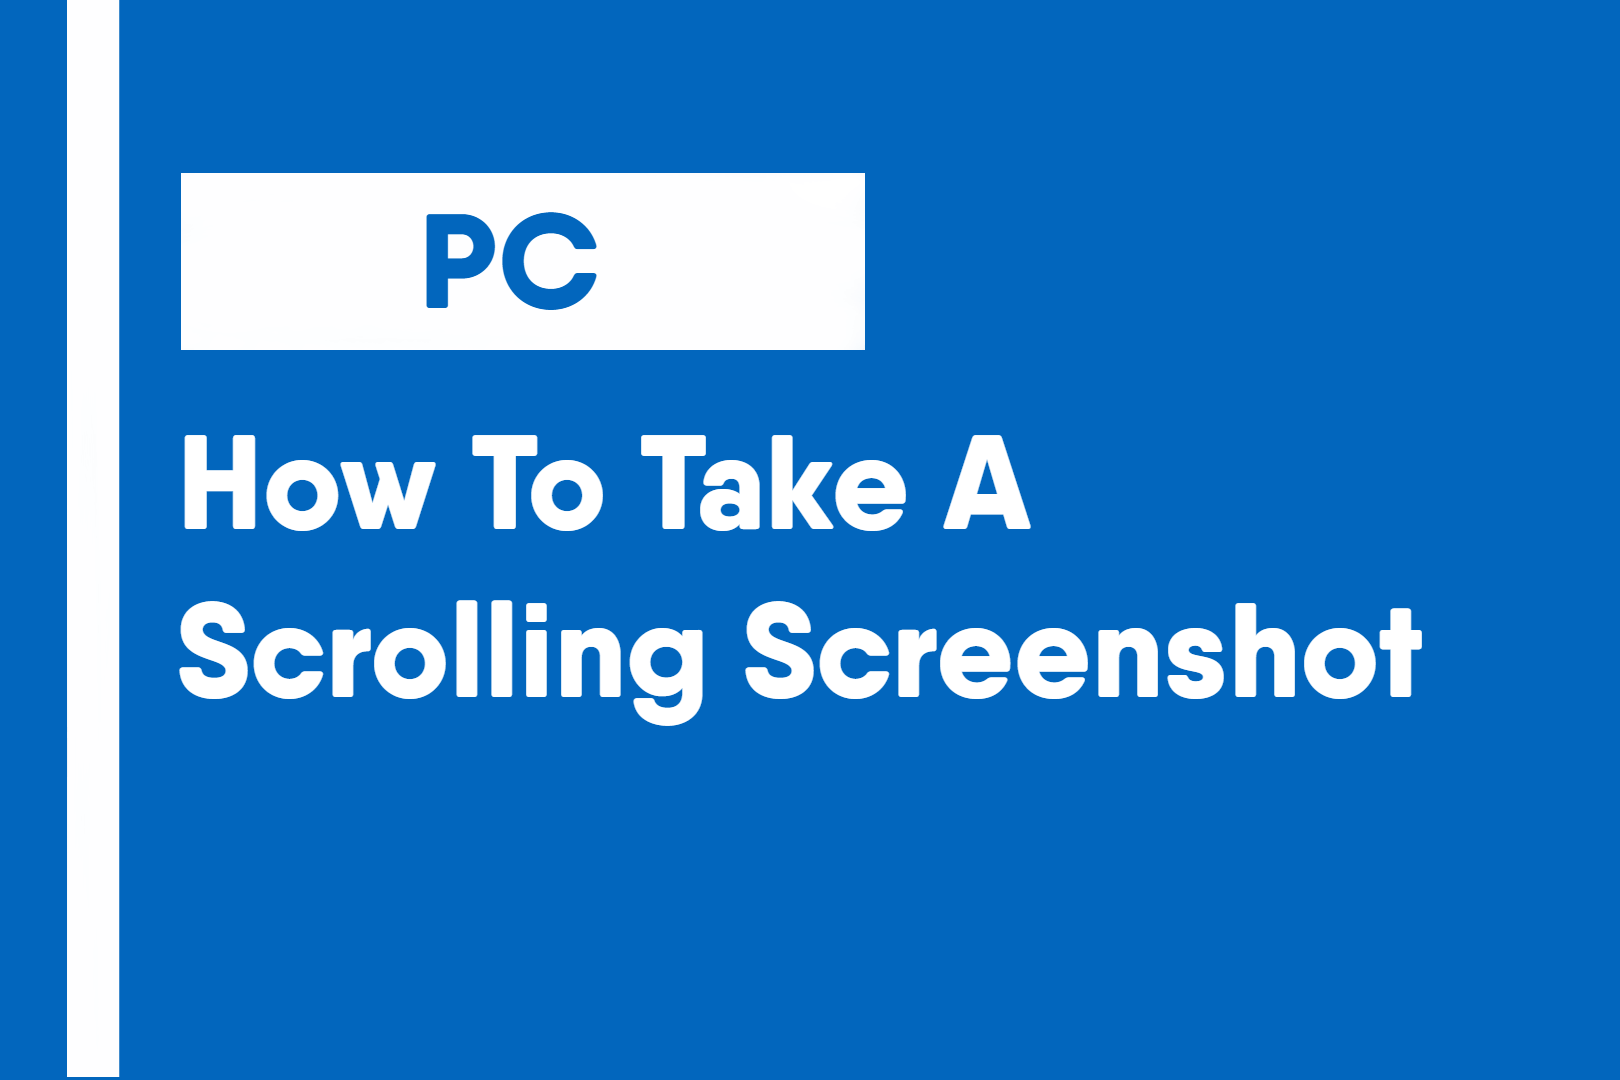 How To Take A Scrolling Screenshot